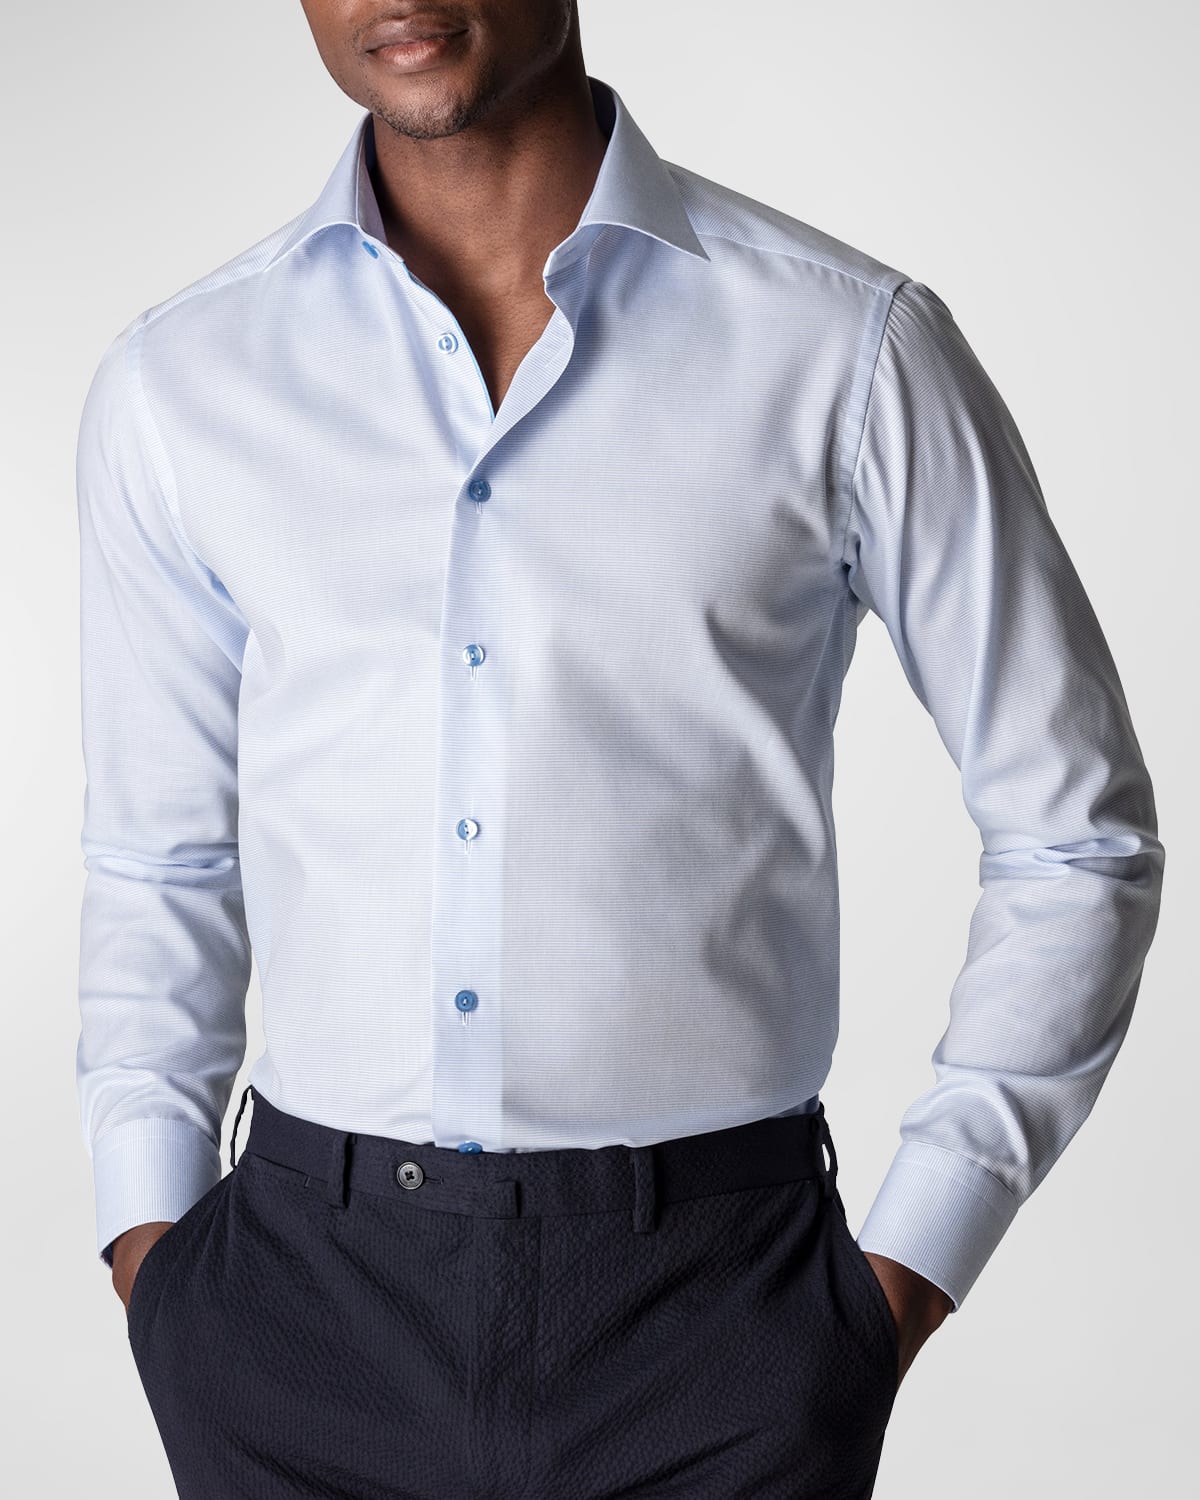 Men's Textured Solid Slim-Fit Dress Shirt